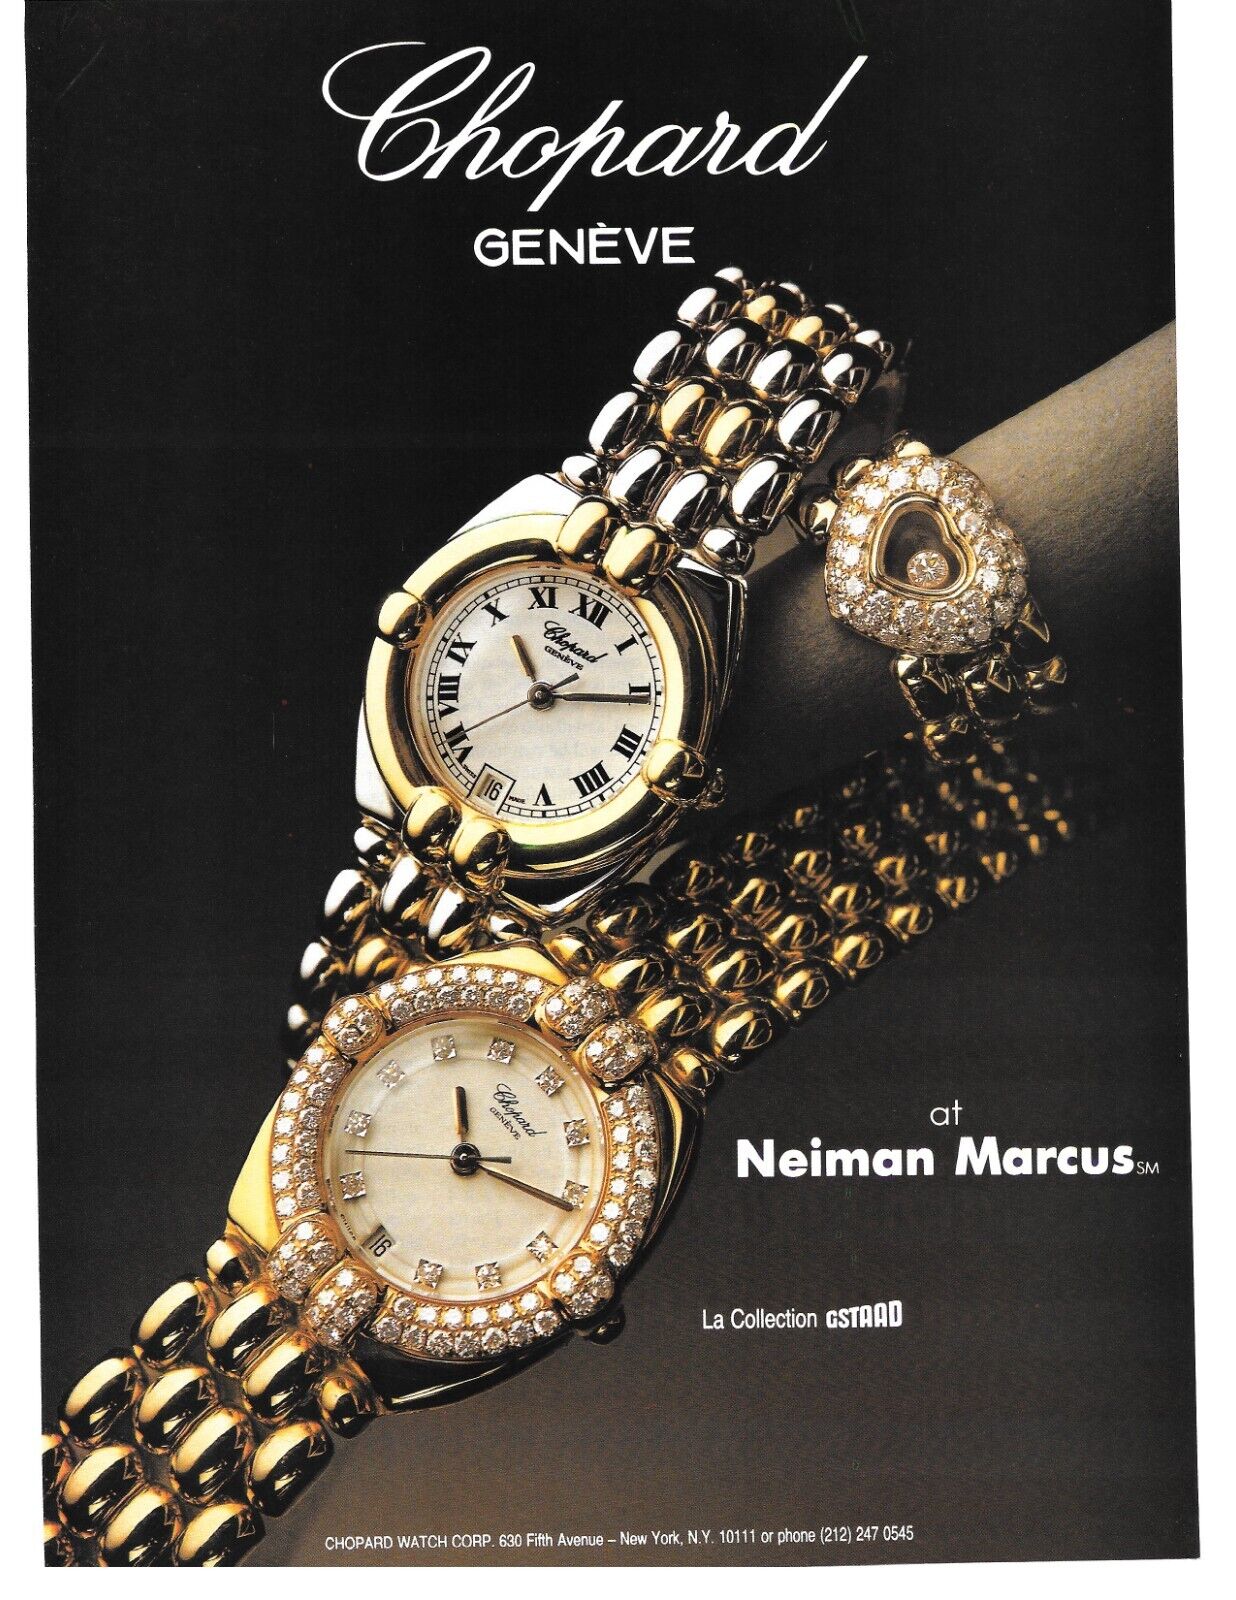 1993 Chopard Geneve, Luxury Gold Diamond Watch, Neiman Marcus Vintage Print Ad